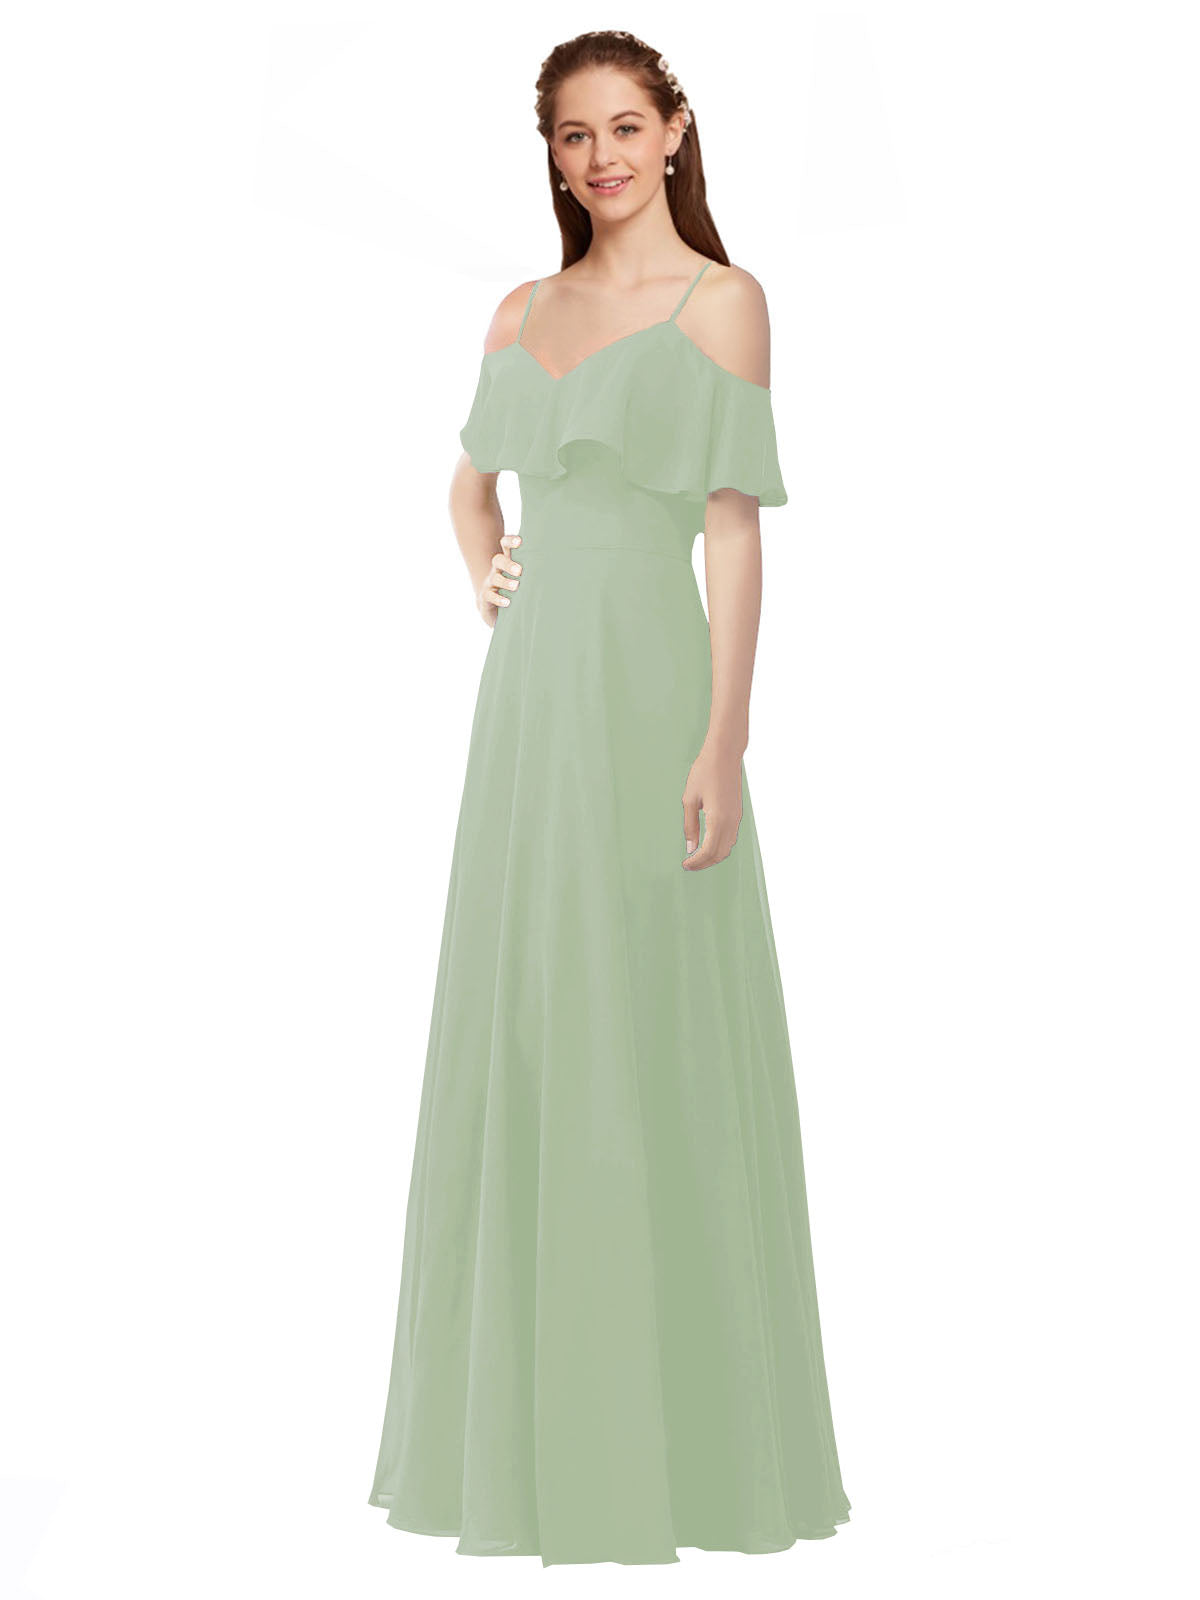 Smoke Green A-Line Off the Shoulder V-Neck Sleeveless Long Bridesmaid Dress Marianna